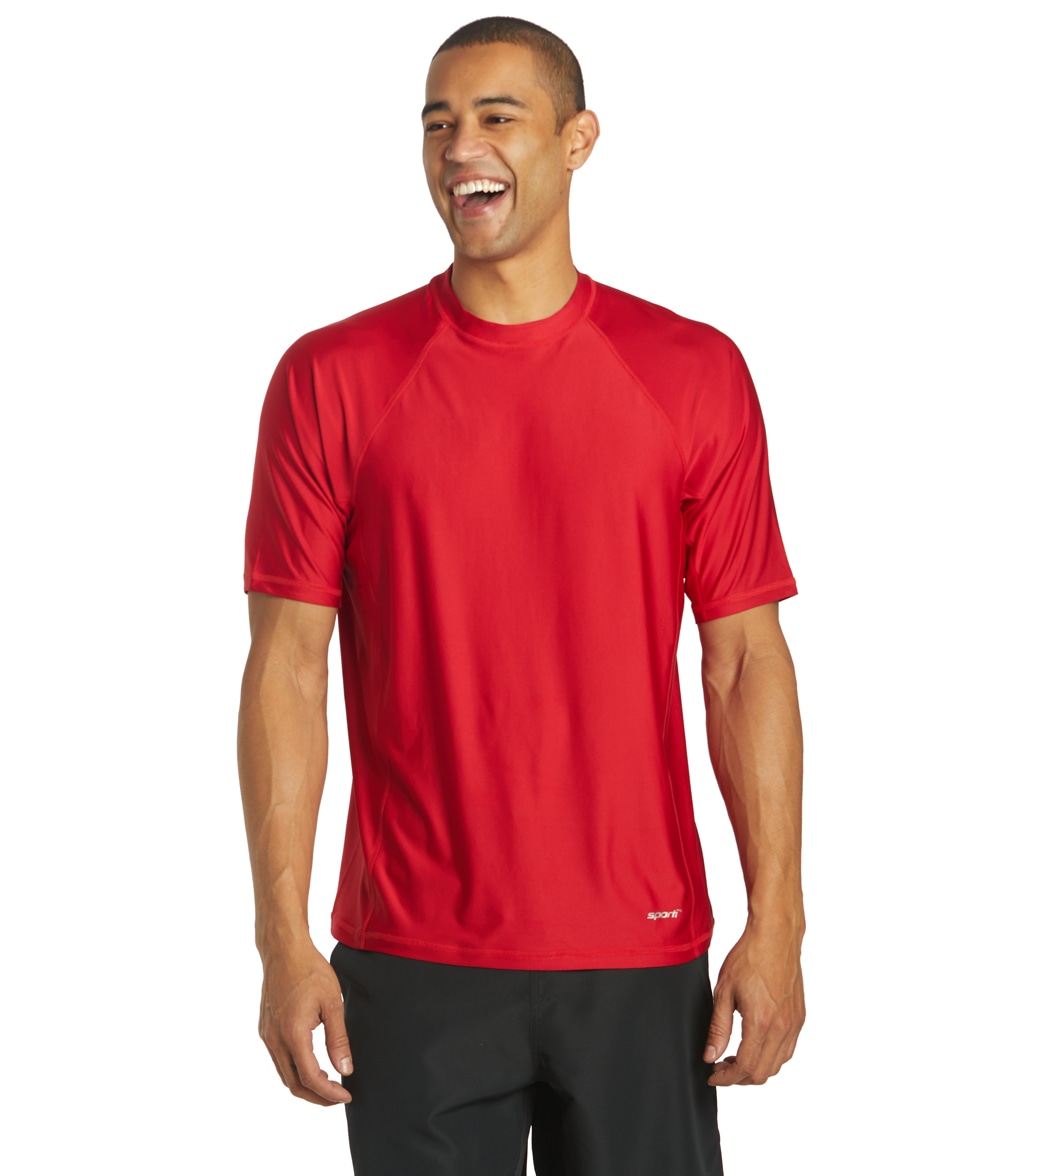 Sporti Men's Short Sleeve Shirt Upf 50+ Comfort Fit Rashguard - Red Medium - Swimoutlet.com